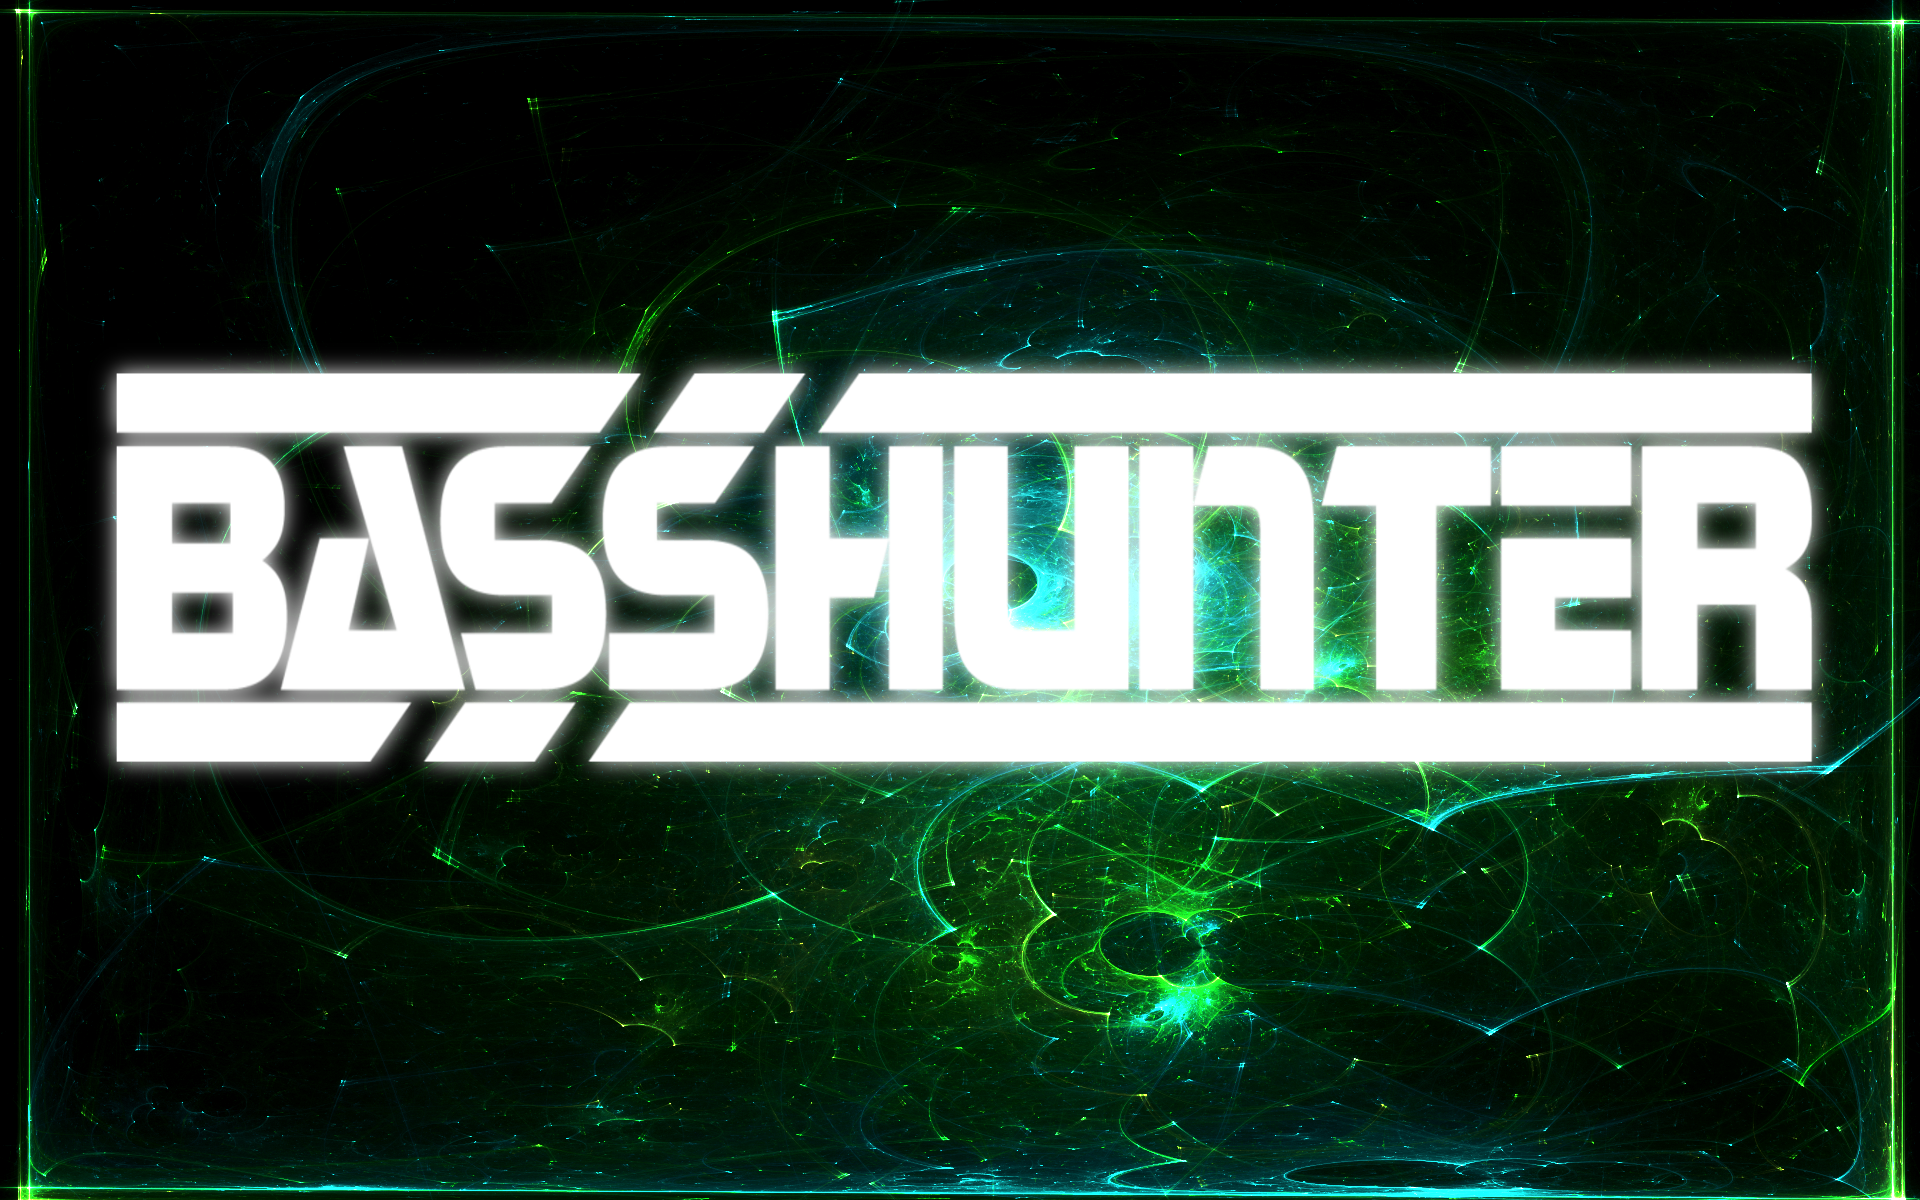 Music Basshunter HD Wallpaper | Background Image